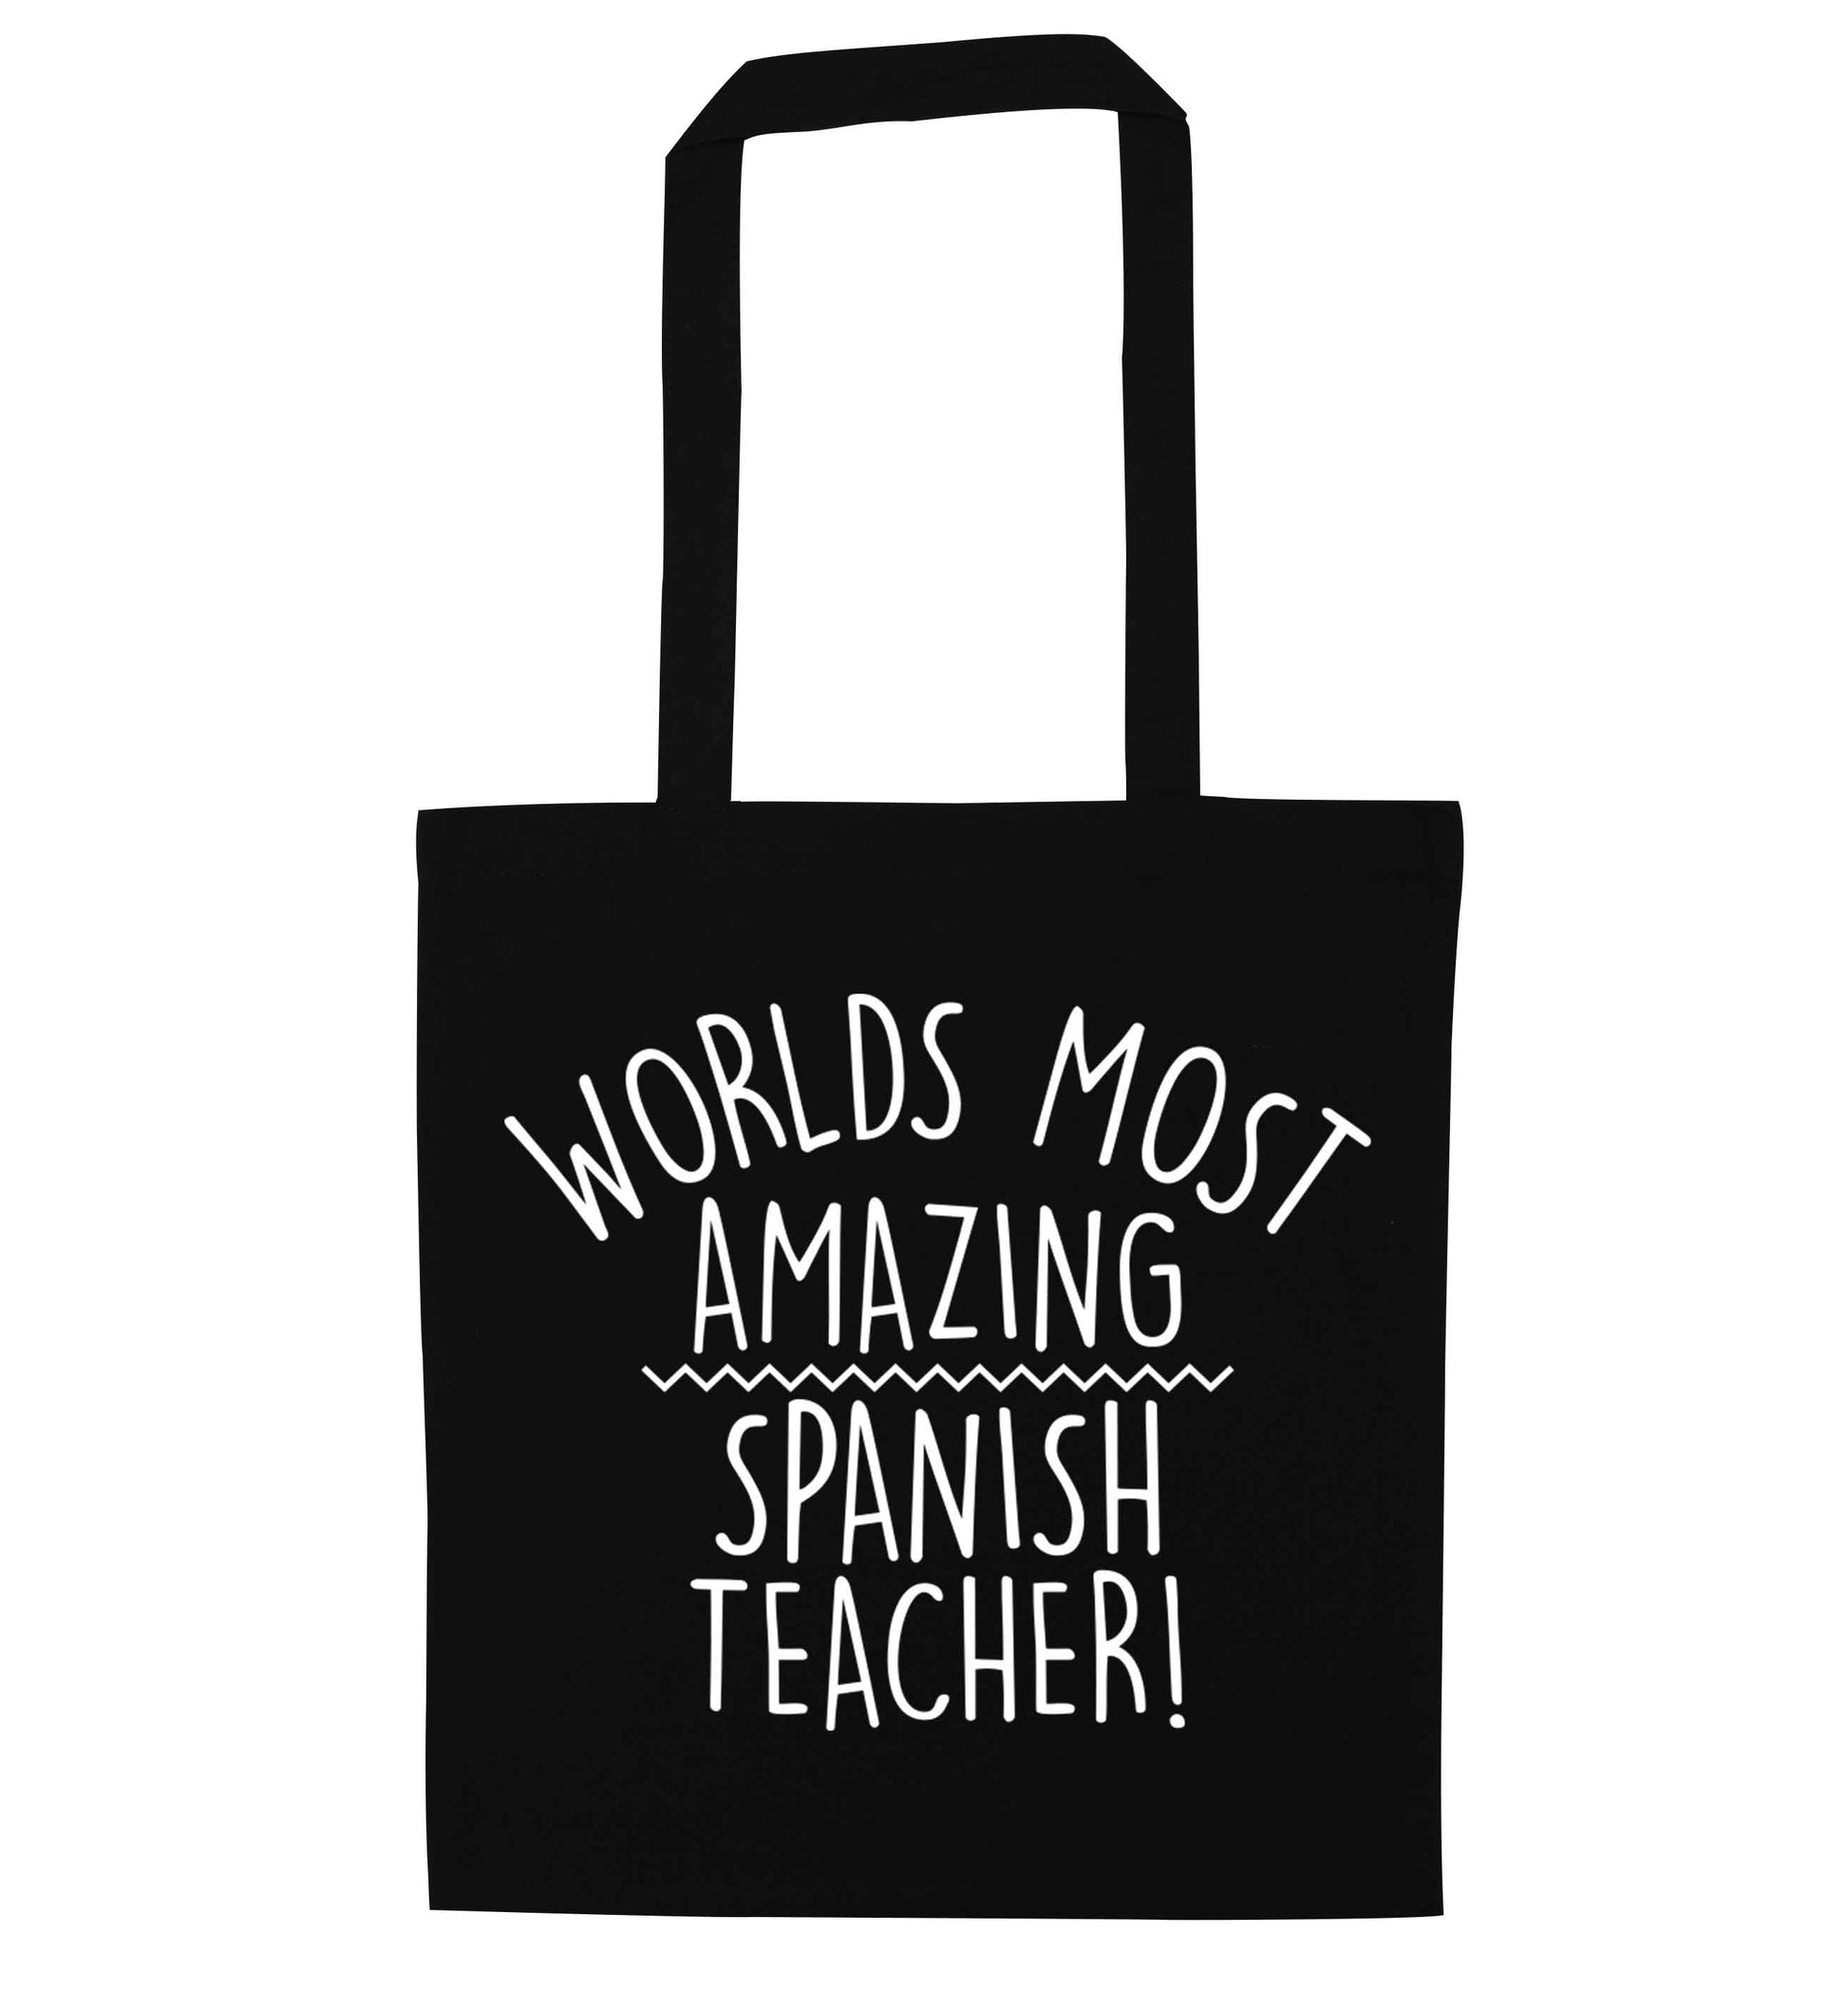 Worlds most amazing Spanish teacher black tote bag